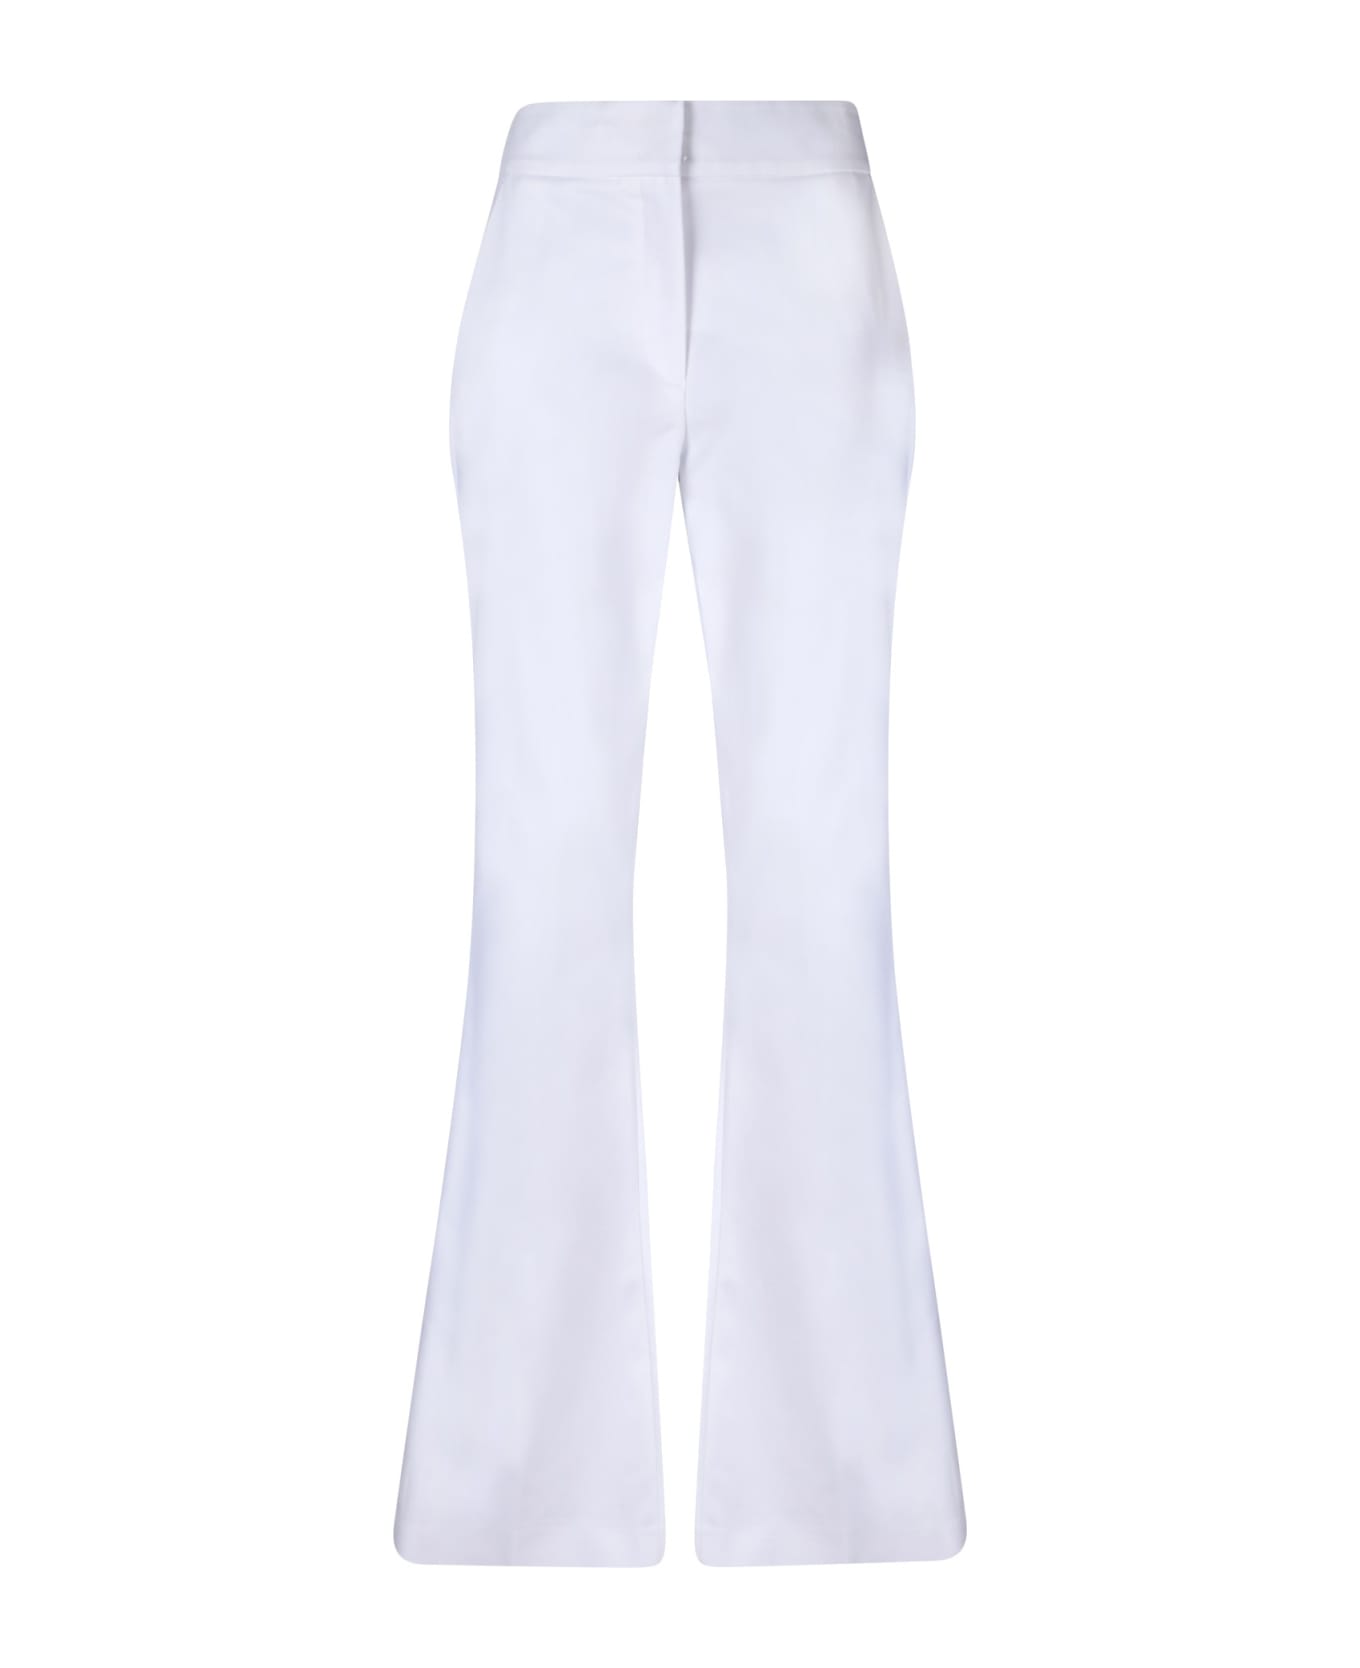 Genny White Cotton Hopper Trousers - White